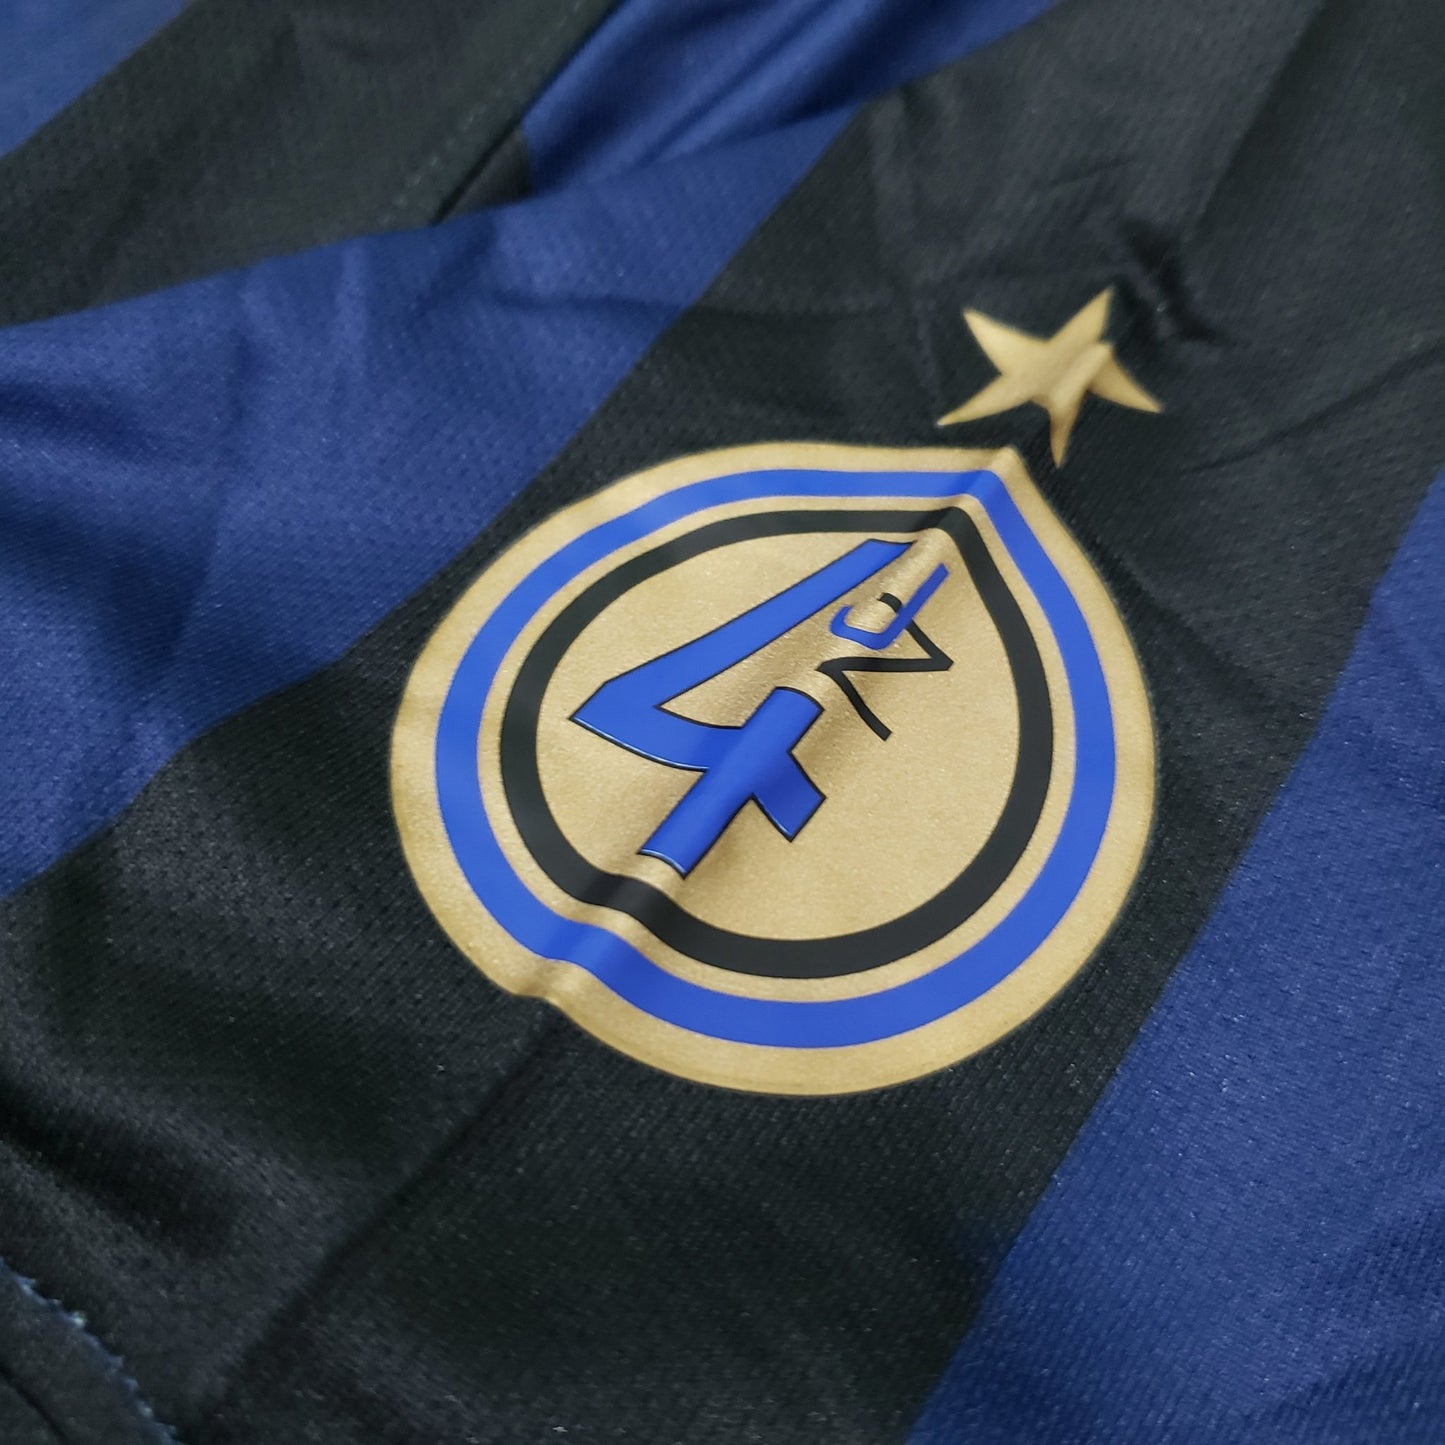 Inter 2013/14 Homenaje a Zanetti - Thunder Internacional